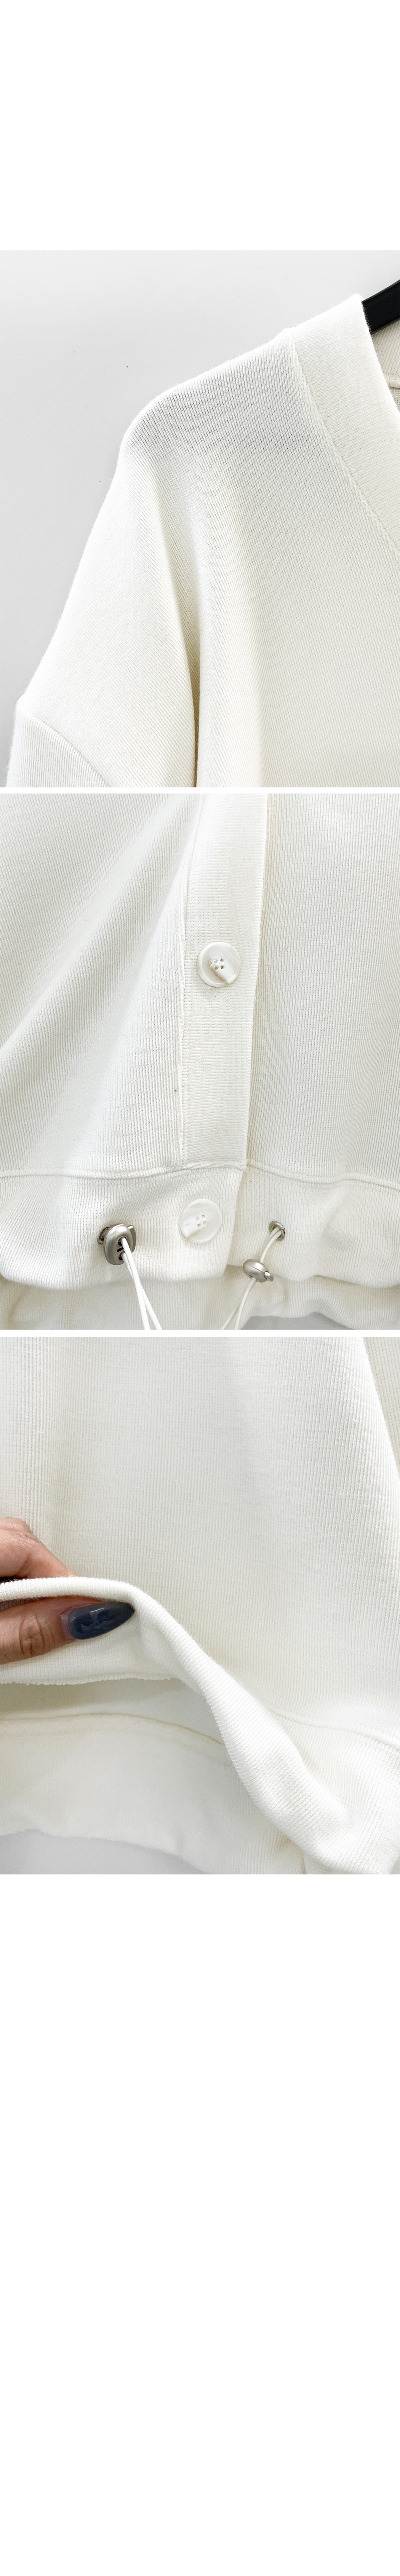 jacket detail image-S1L12